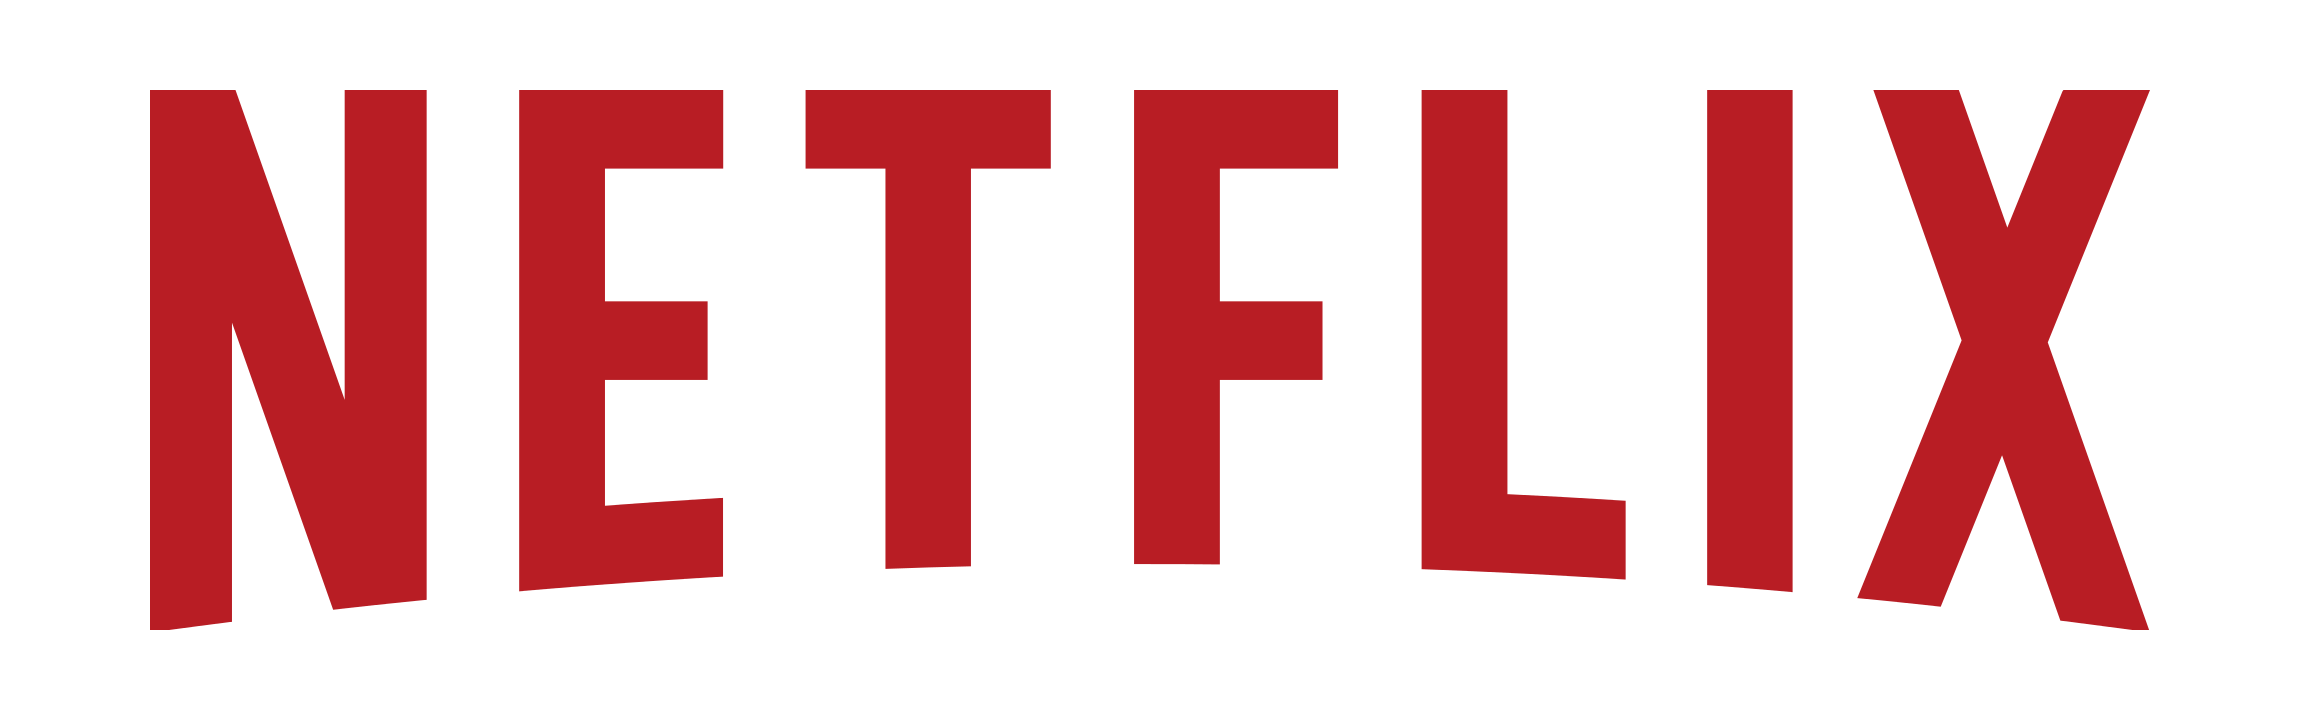 Nwtflix Logo - Meaning Netflix logo and symbol | history and evolution